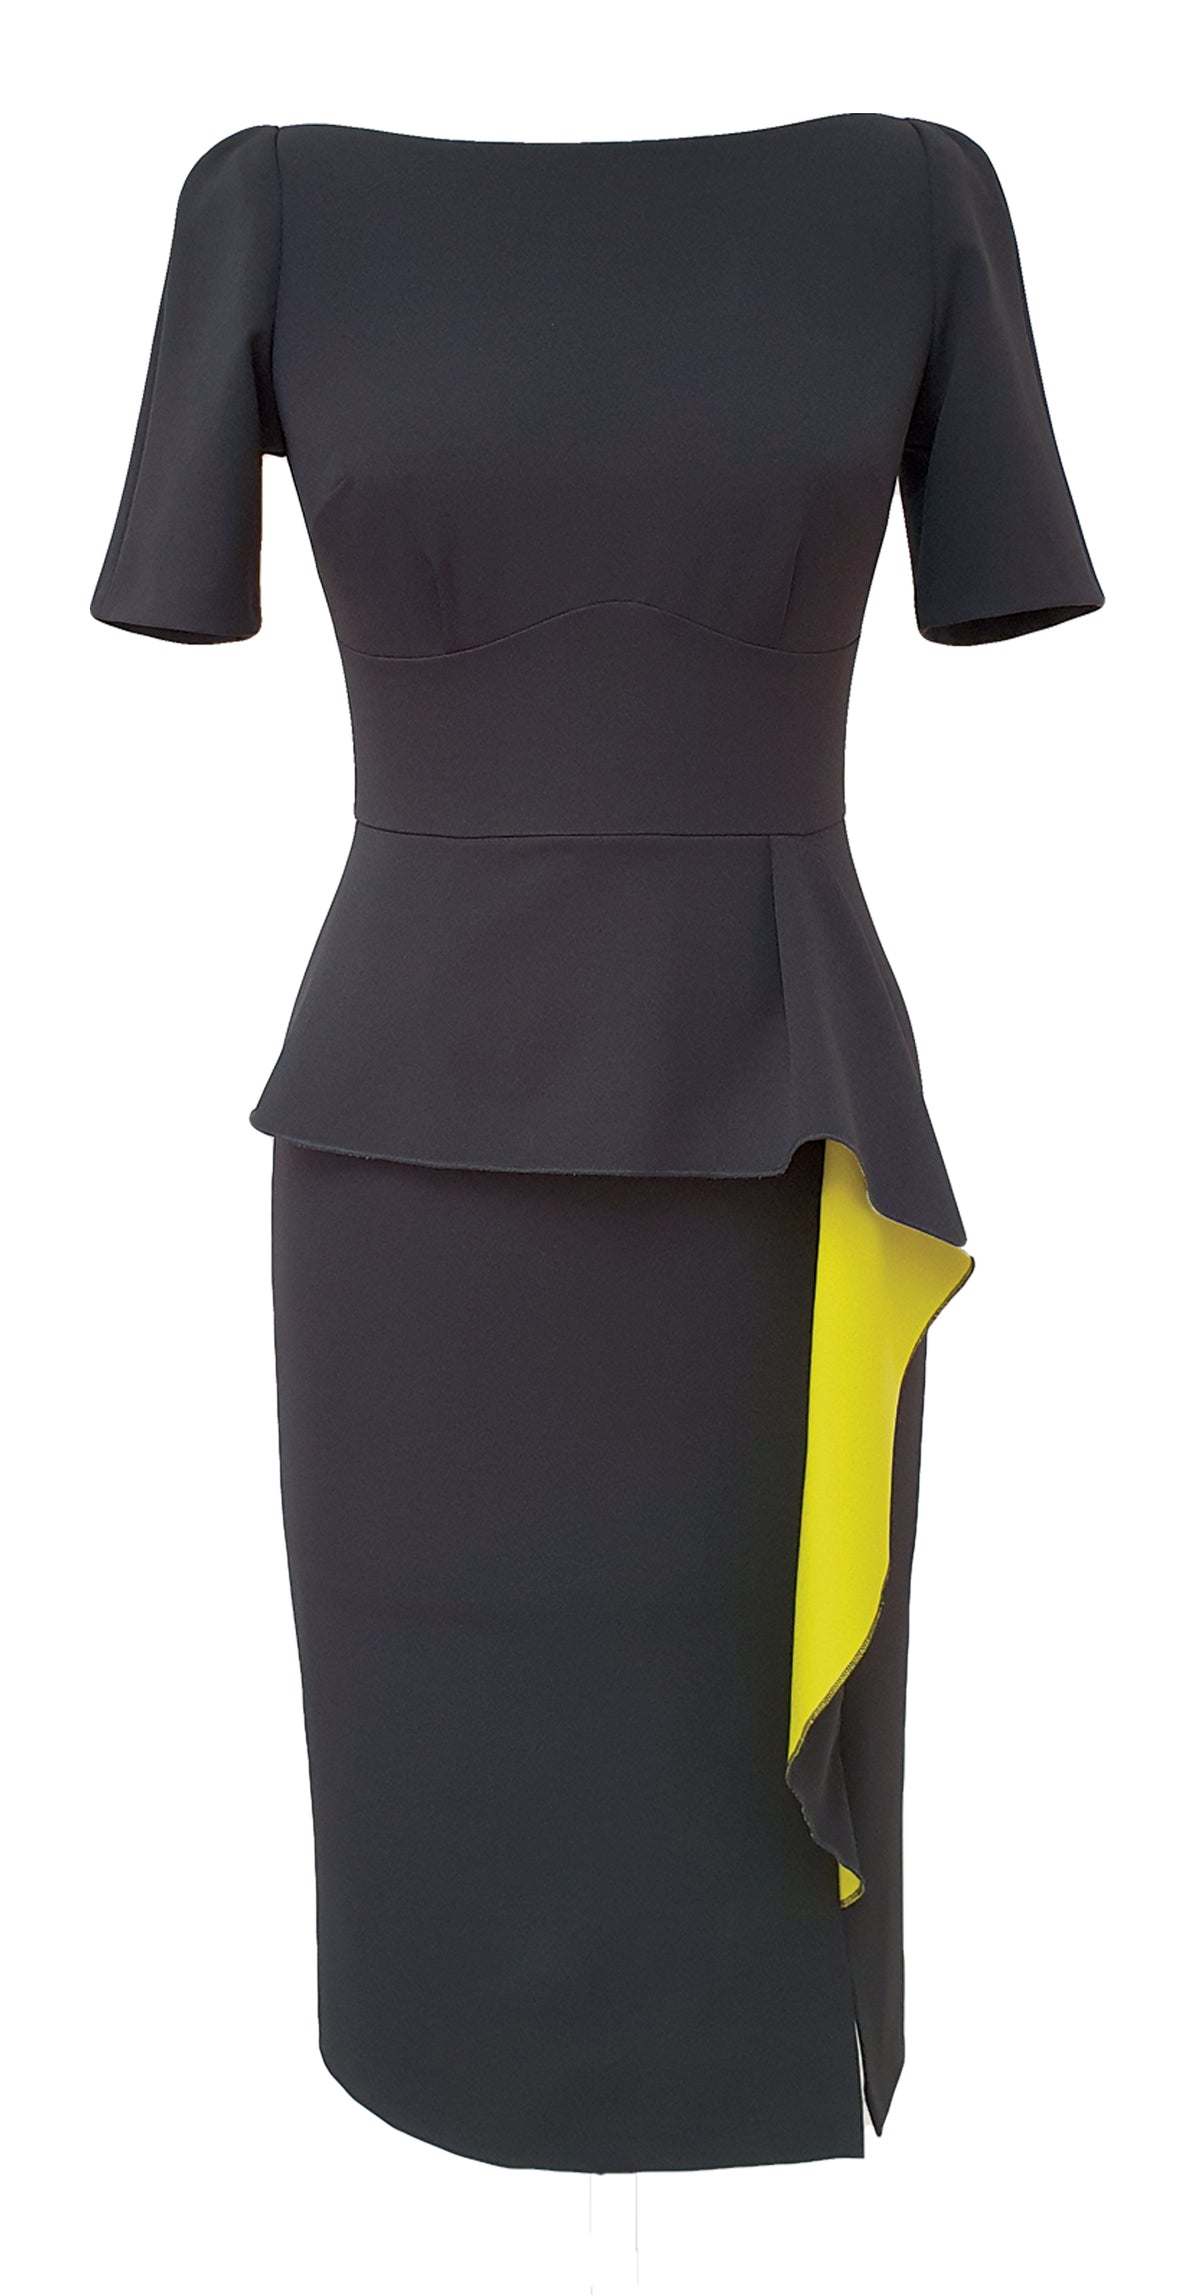 Jayne Dress DRC300 Black/Yellow Contrast Crepe